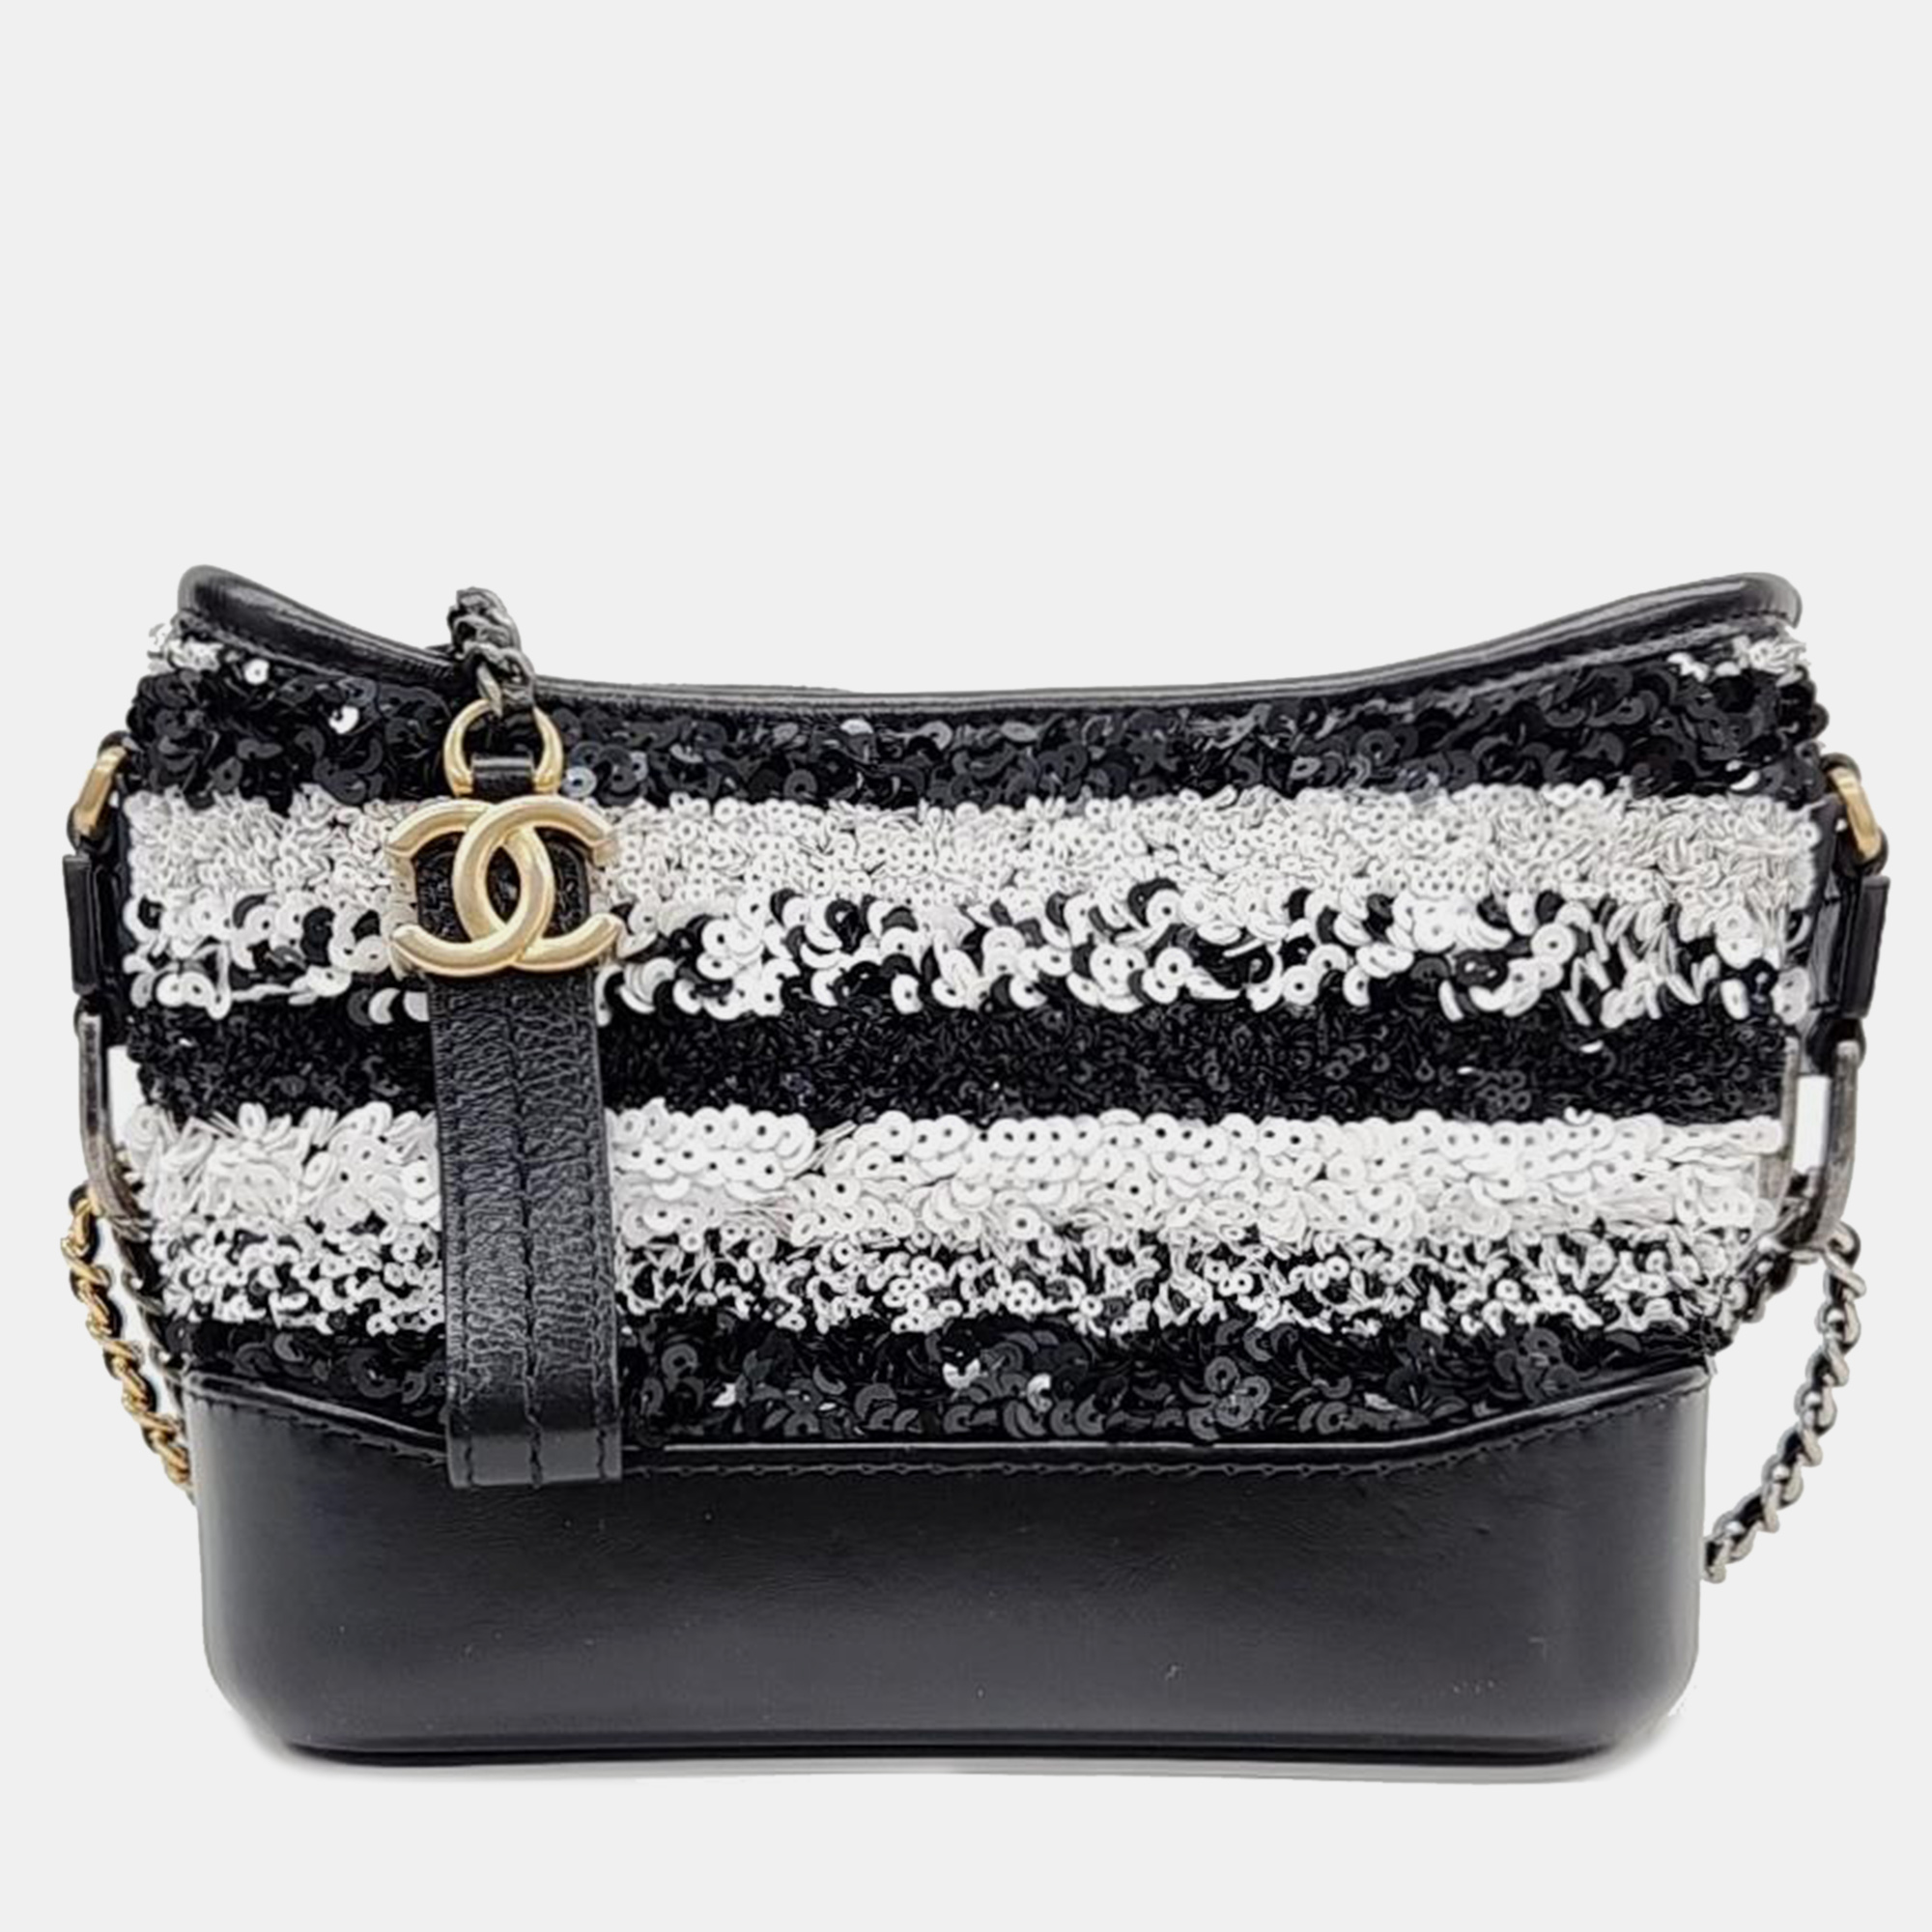 Chanel black/ white spangle gabriel small hobo bag